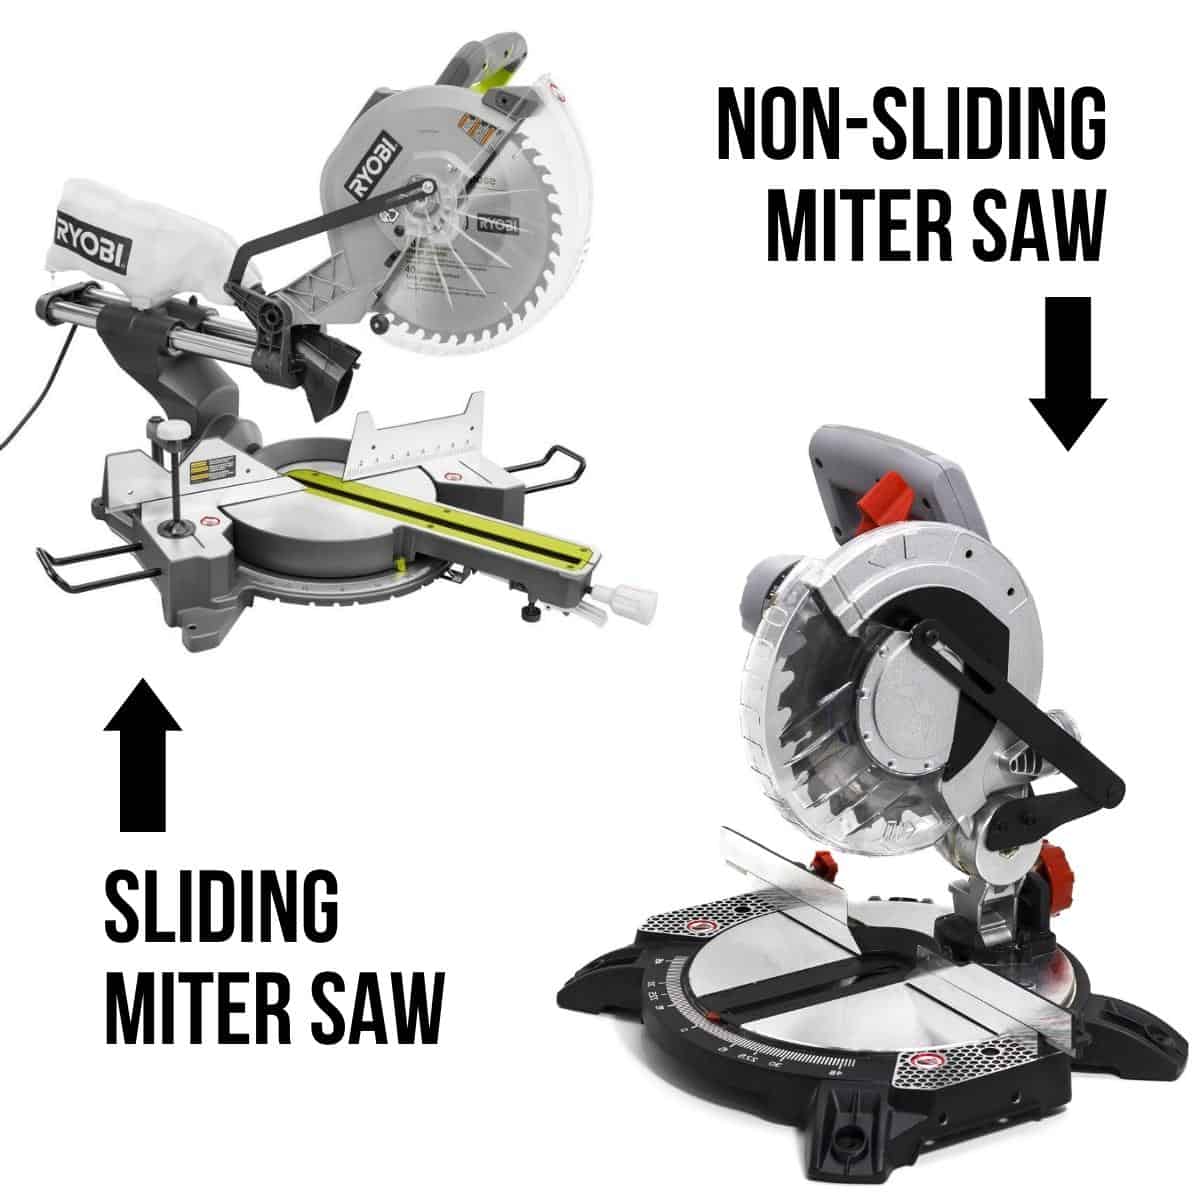 sliding vs non-sliding miter saw